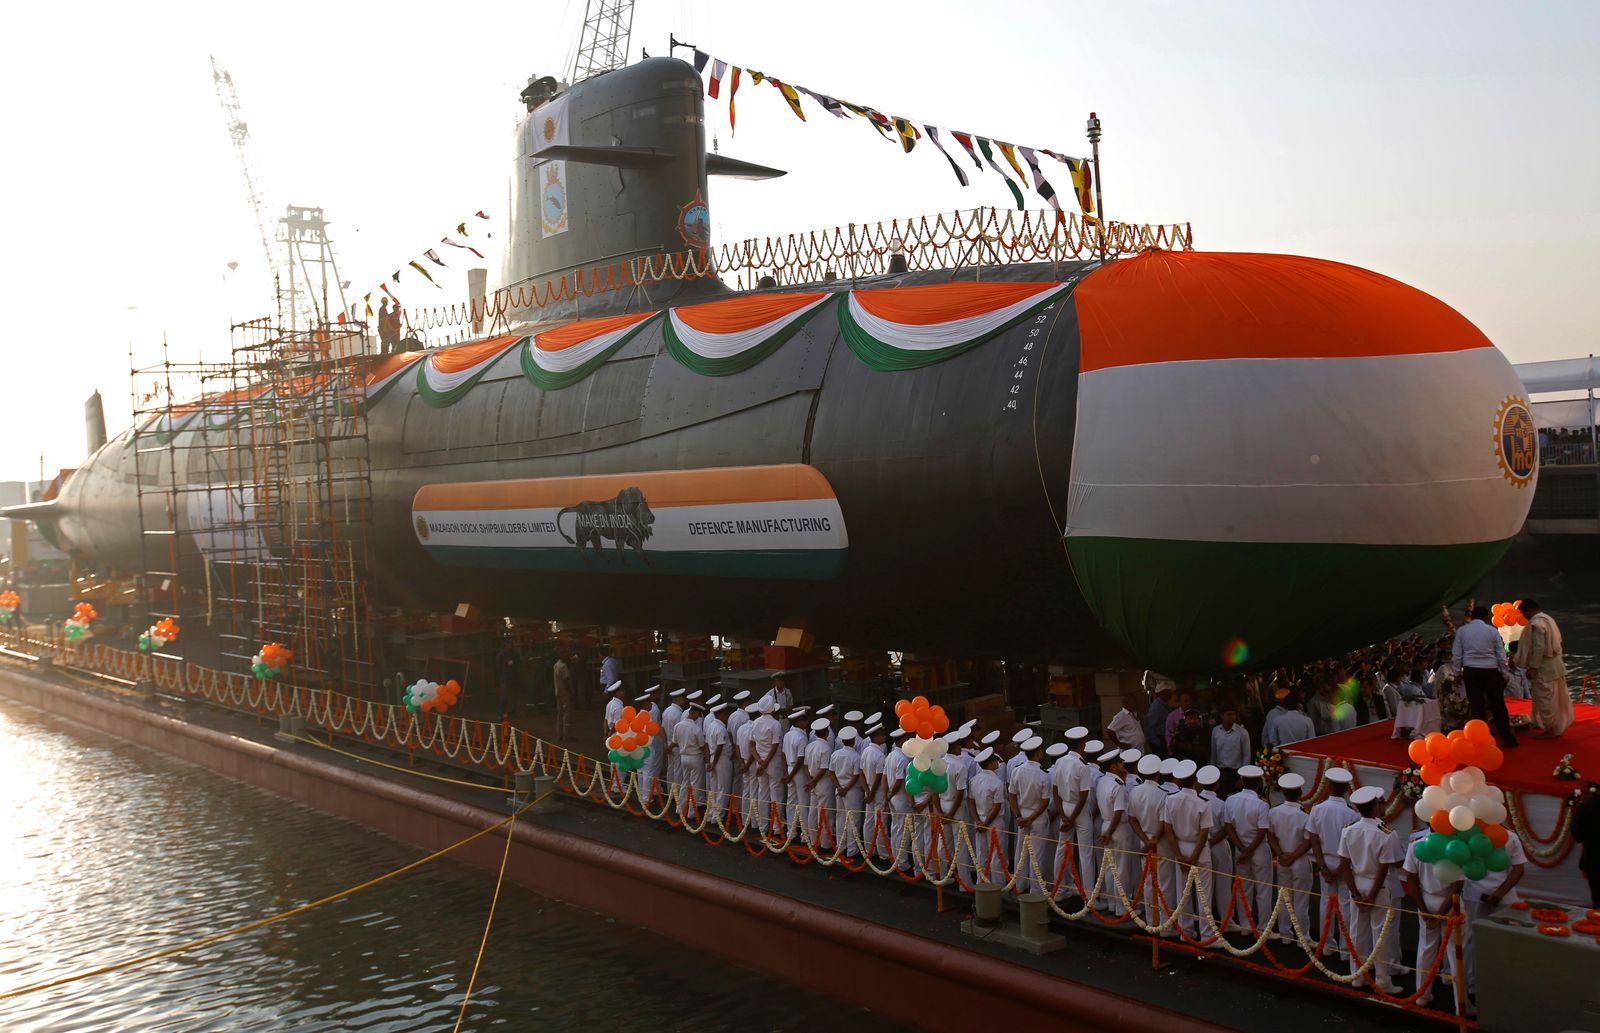 Bradley Jimenez Berita: India Submarine Lost